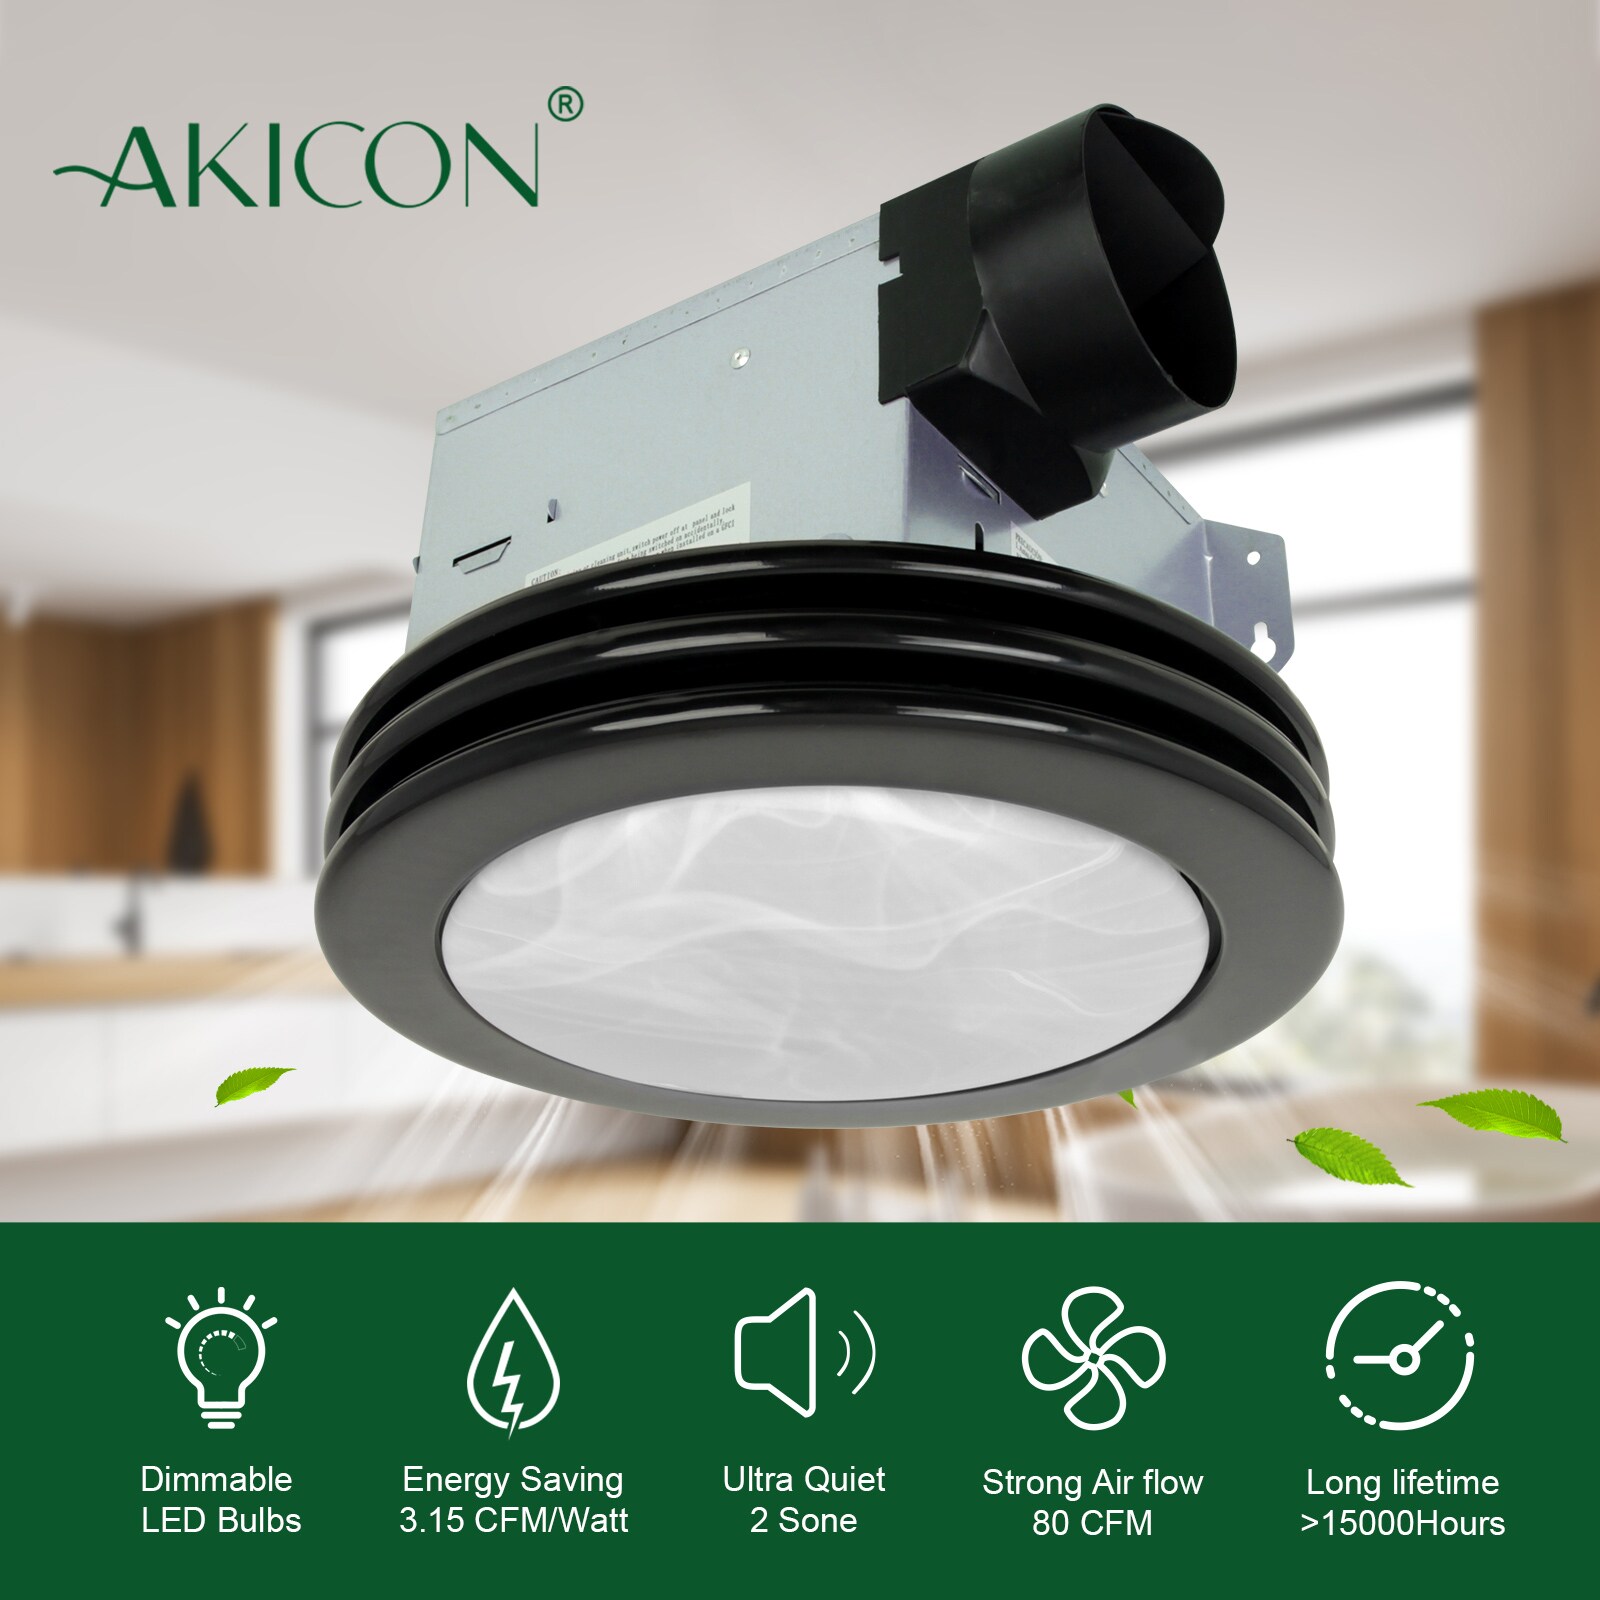 Akicon Bathroom Fan With Lights 2 Sone